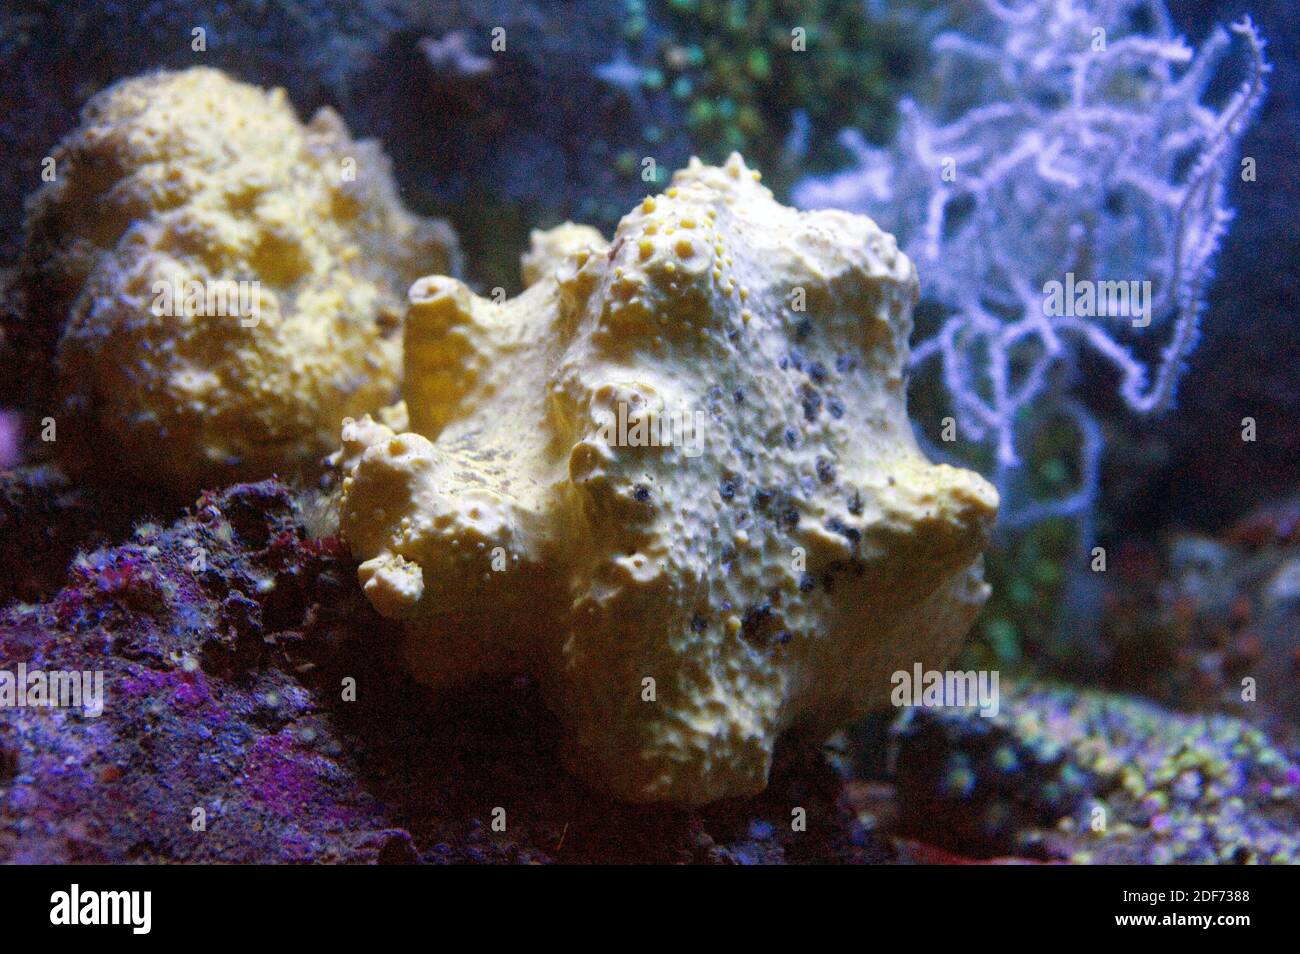 Cliona celata es una esponja marina de la clase Demospongiae. Foto de stock